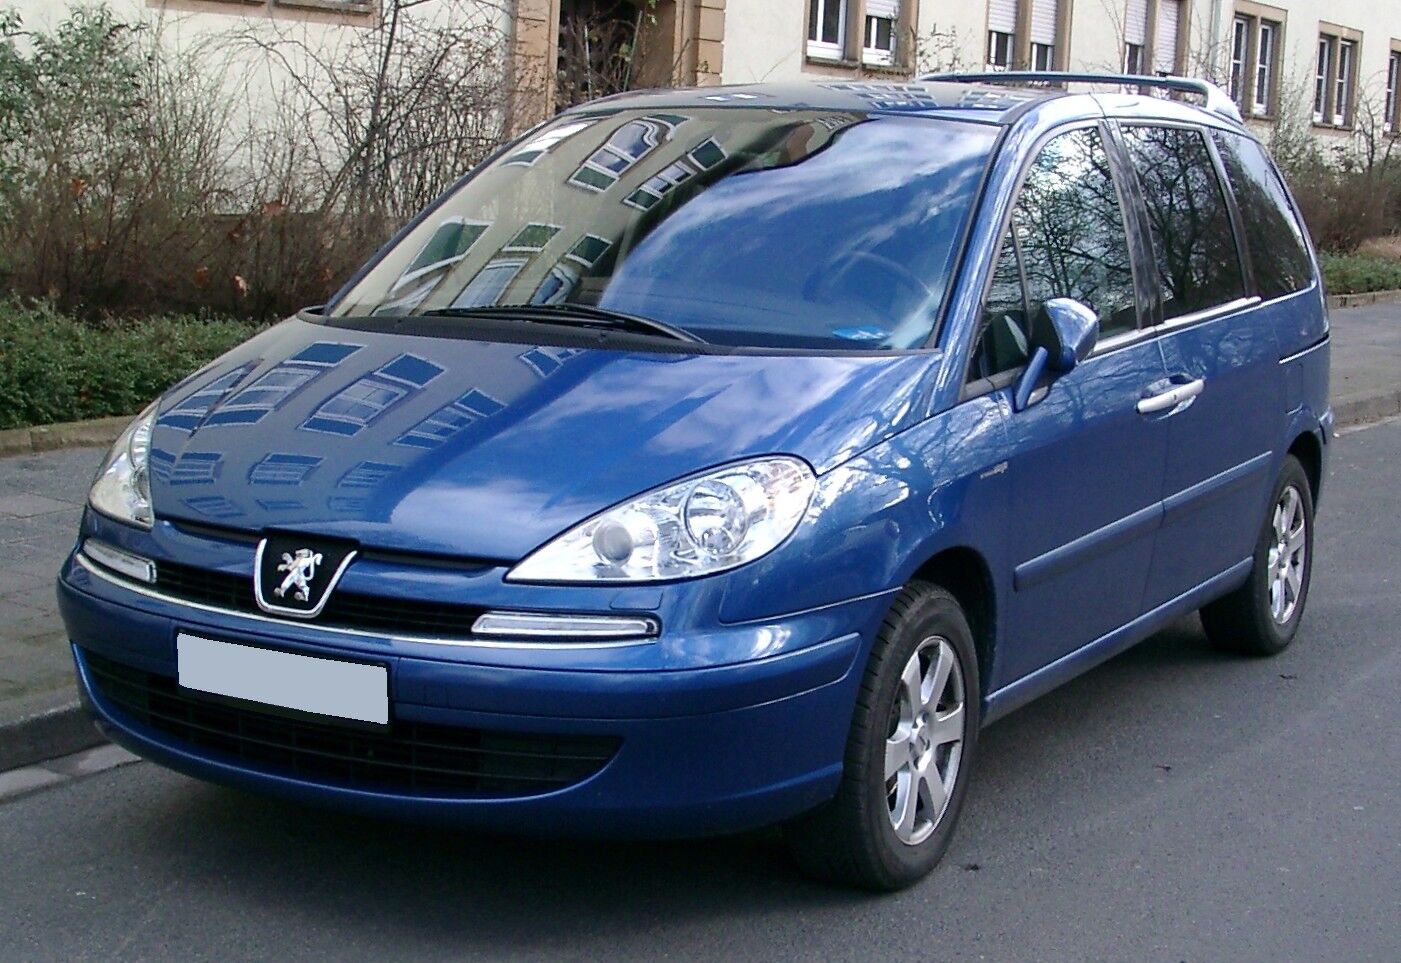 File:Peugeot 407 HDi Executive.jpg - Wikipedia